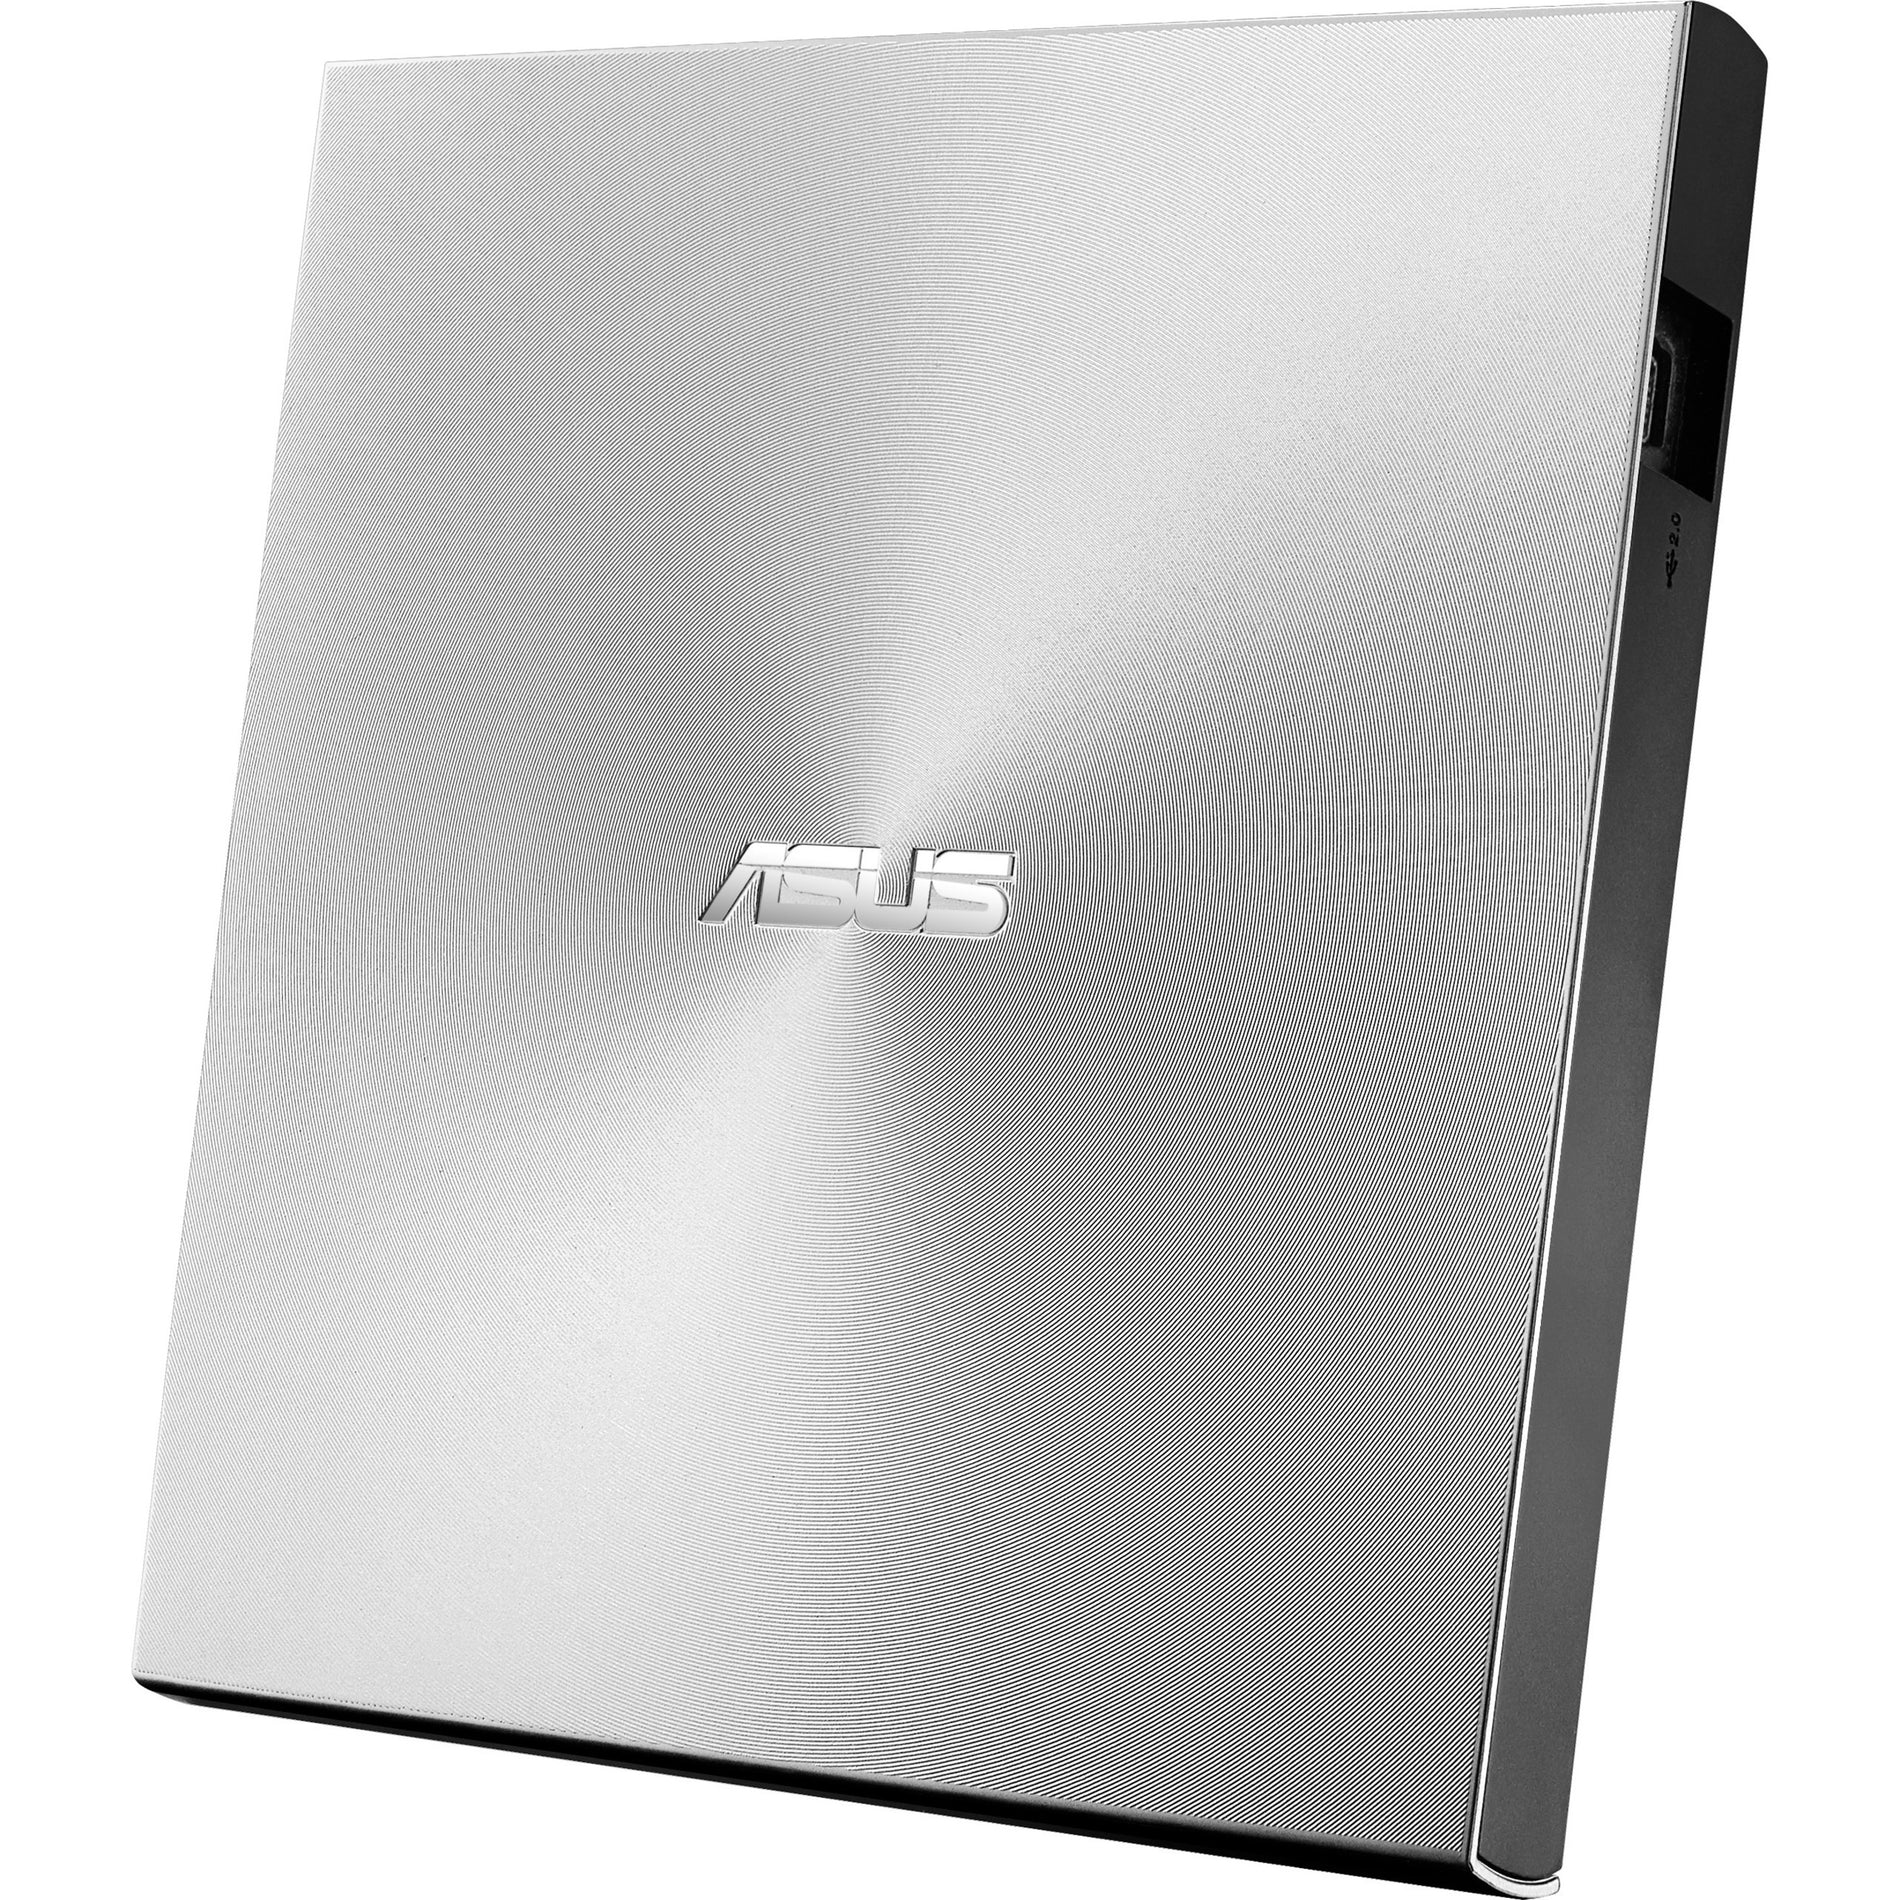 Asus SDRW-08U9M-U/SIL ZenDrive U9M DVD Writer, USB 2.0 & Type-C for Mac/PC